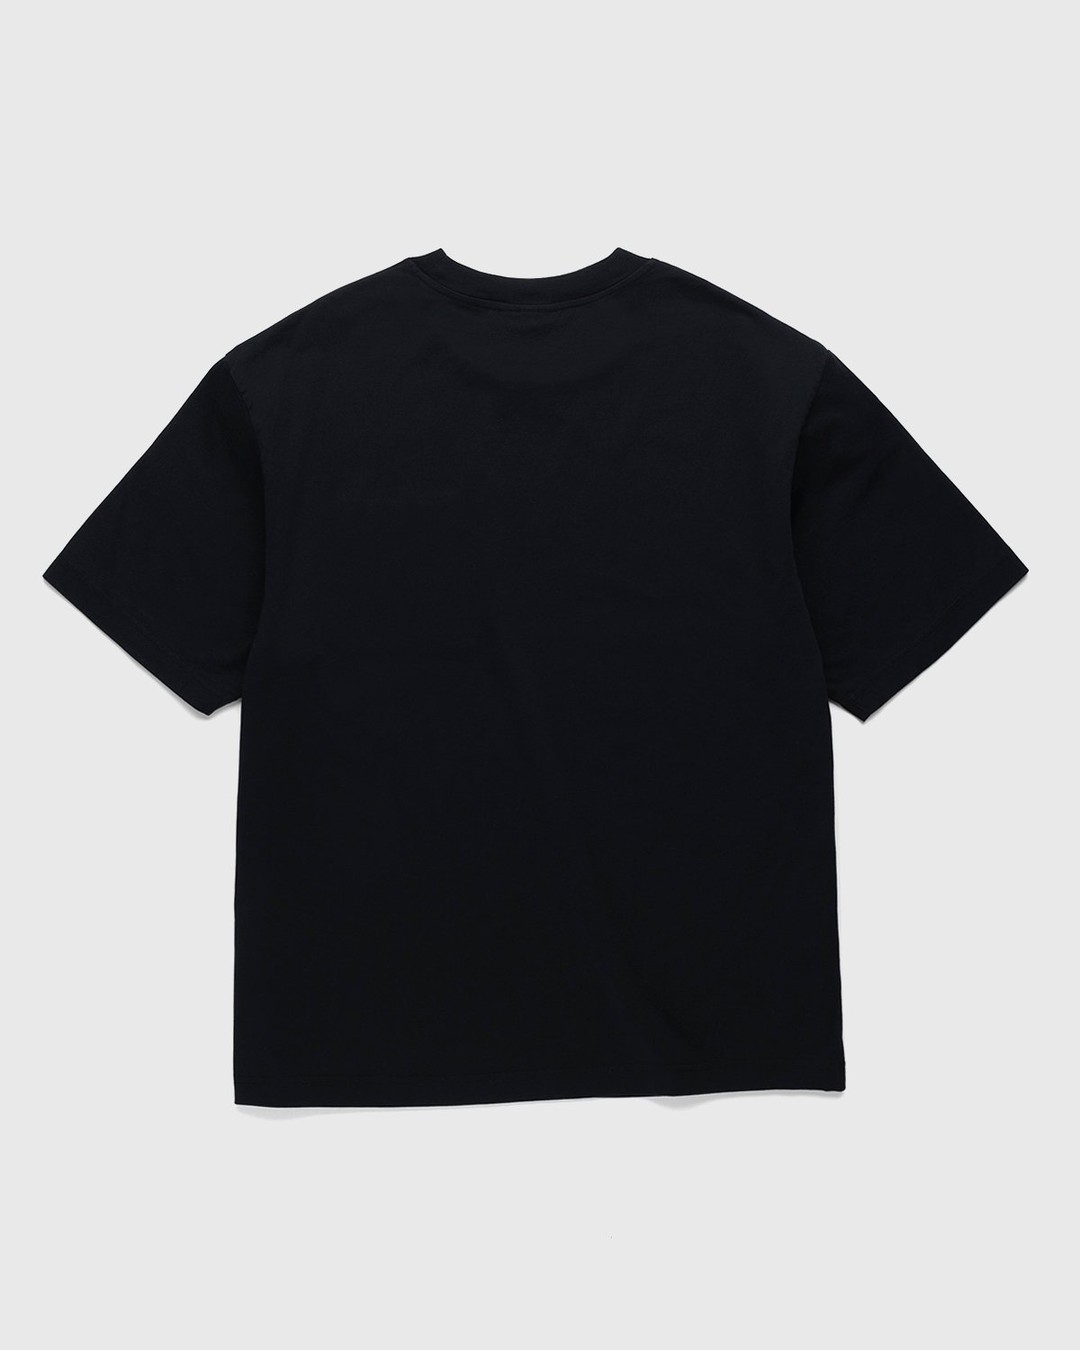 Acne Studios – Short Sleeve Pocket T-Shirt Black - T-shirts - Black - Image 2